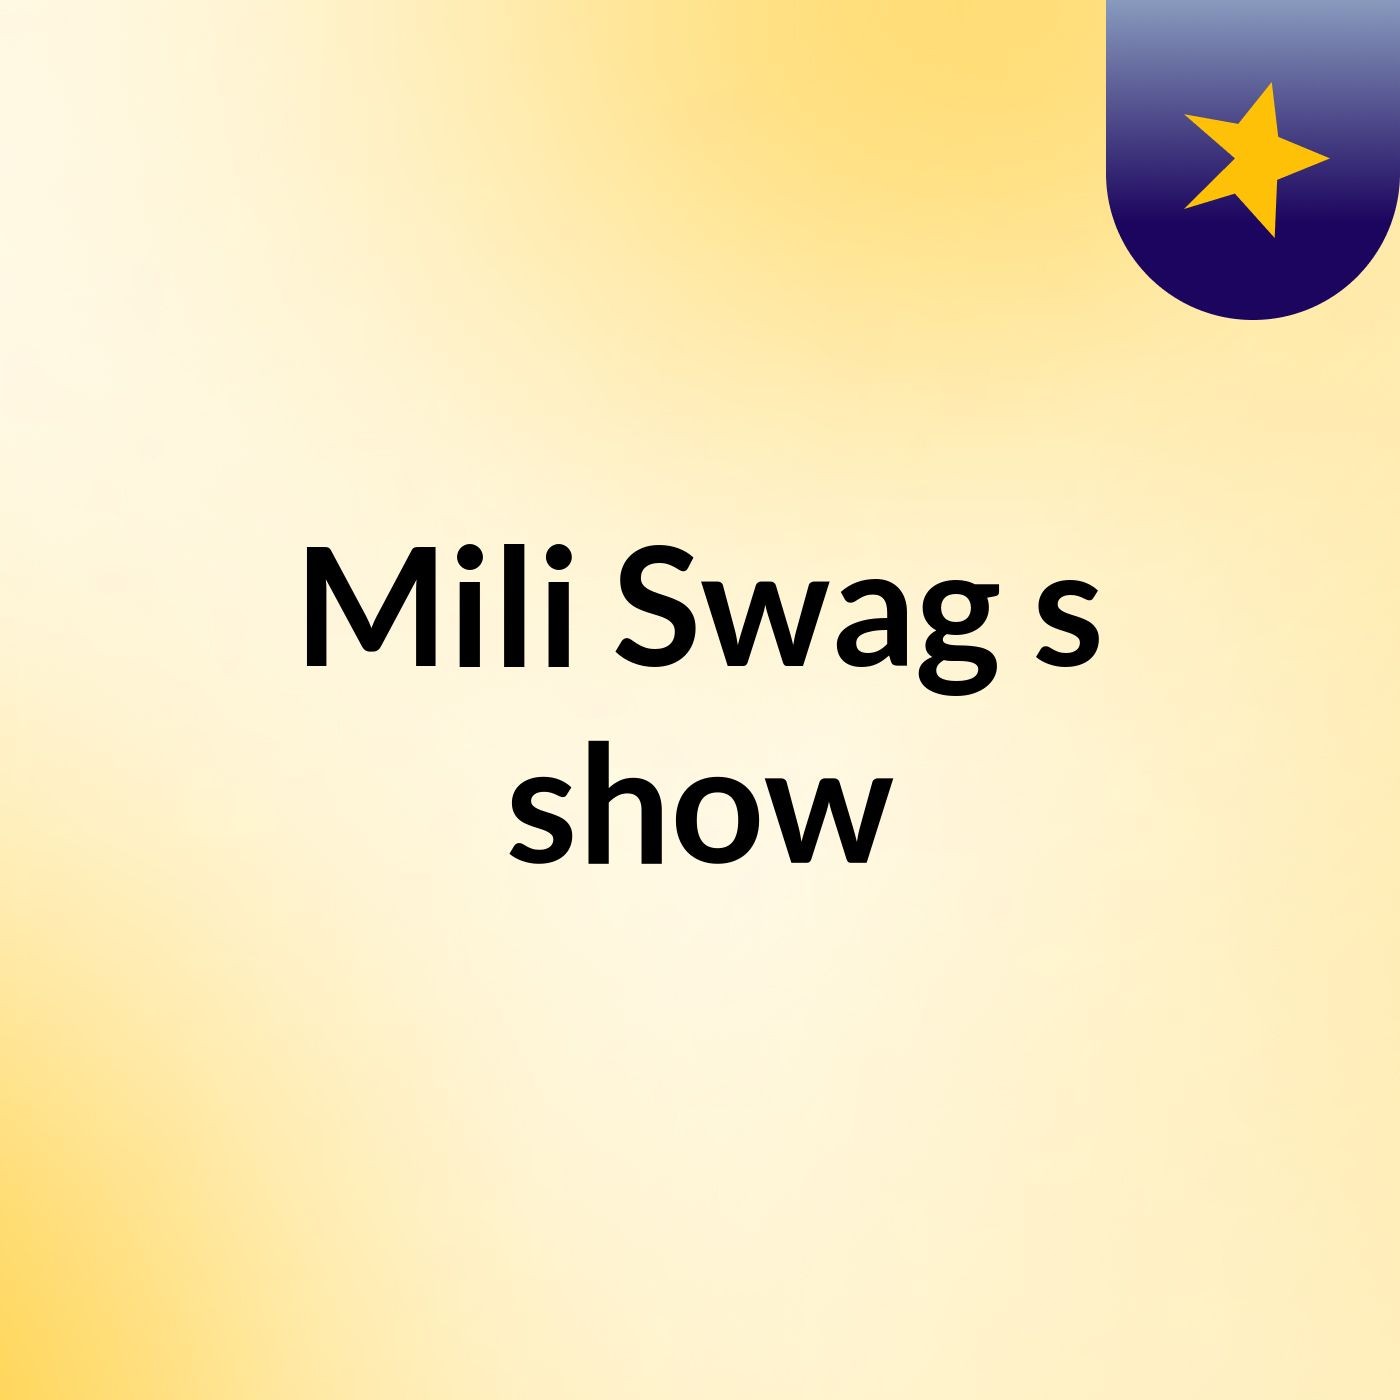 Mili Swag's show